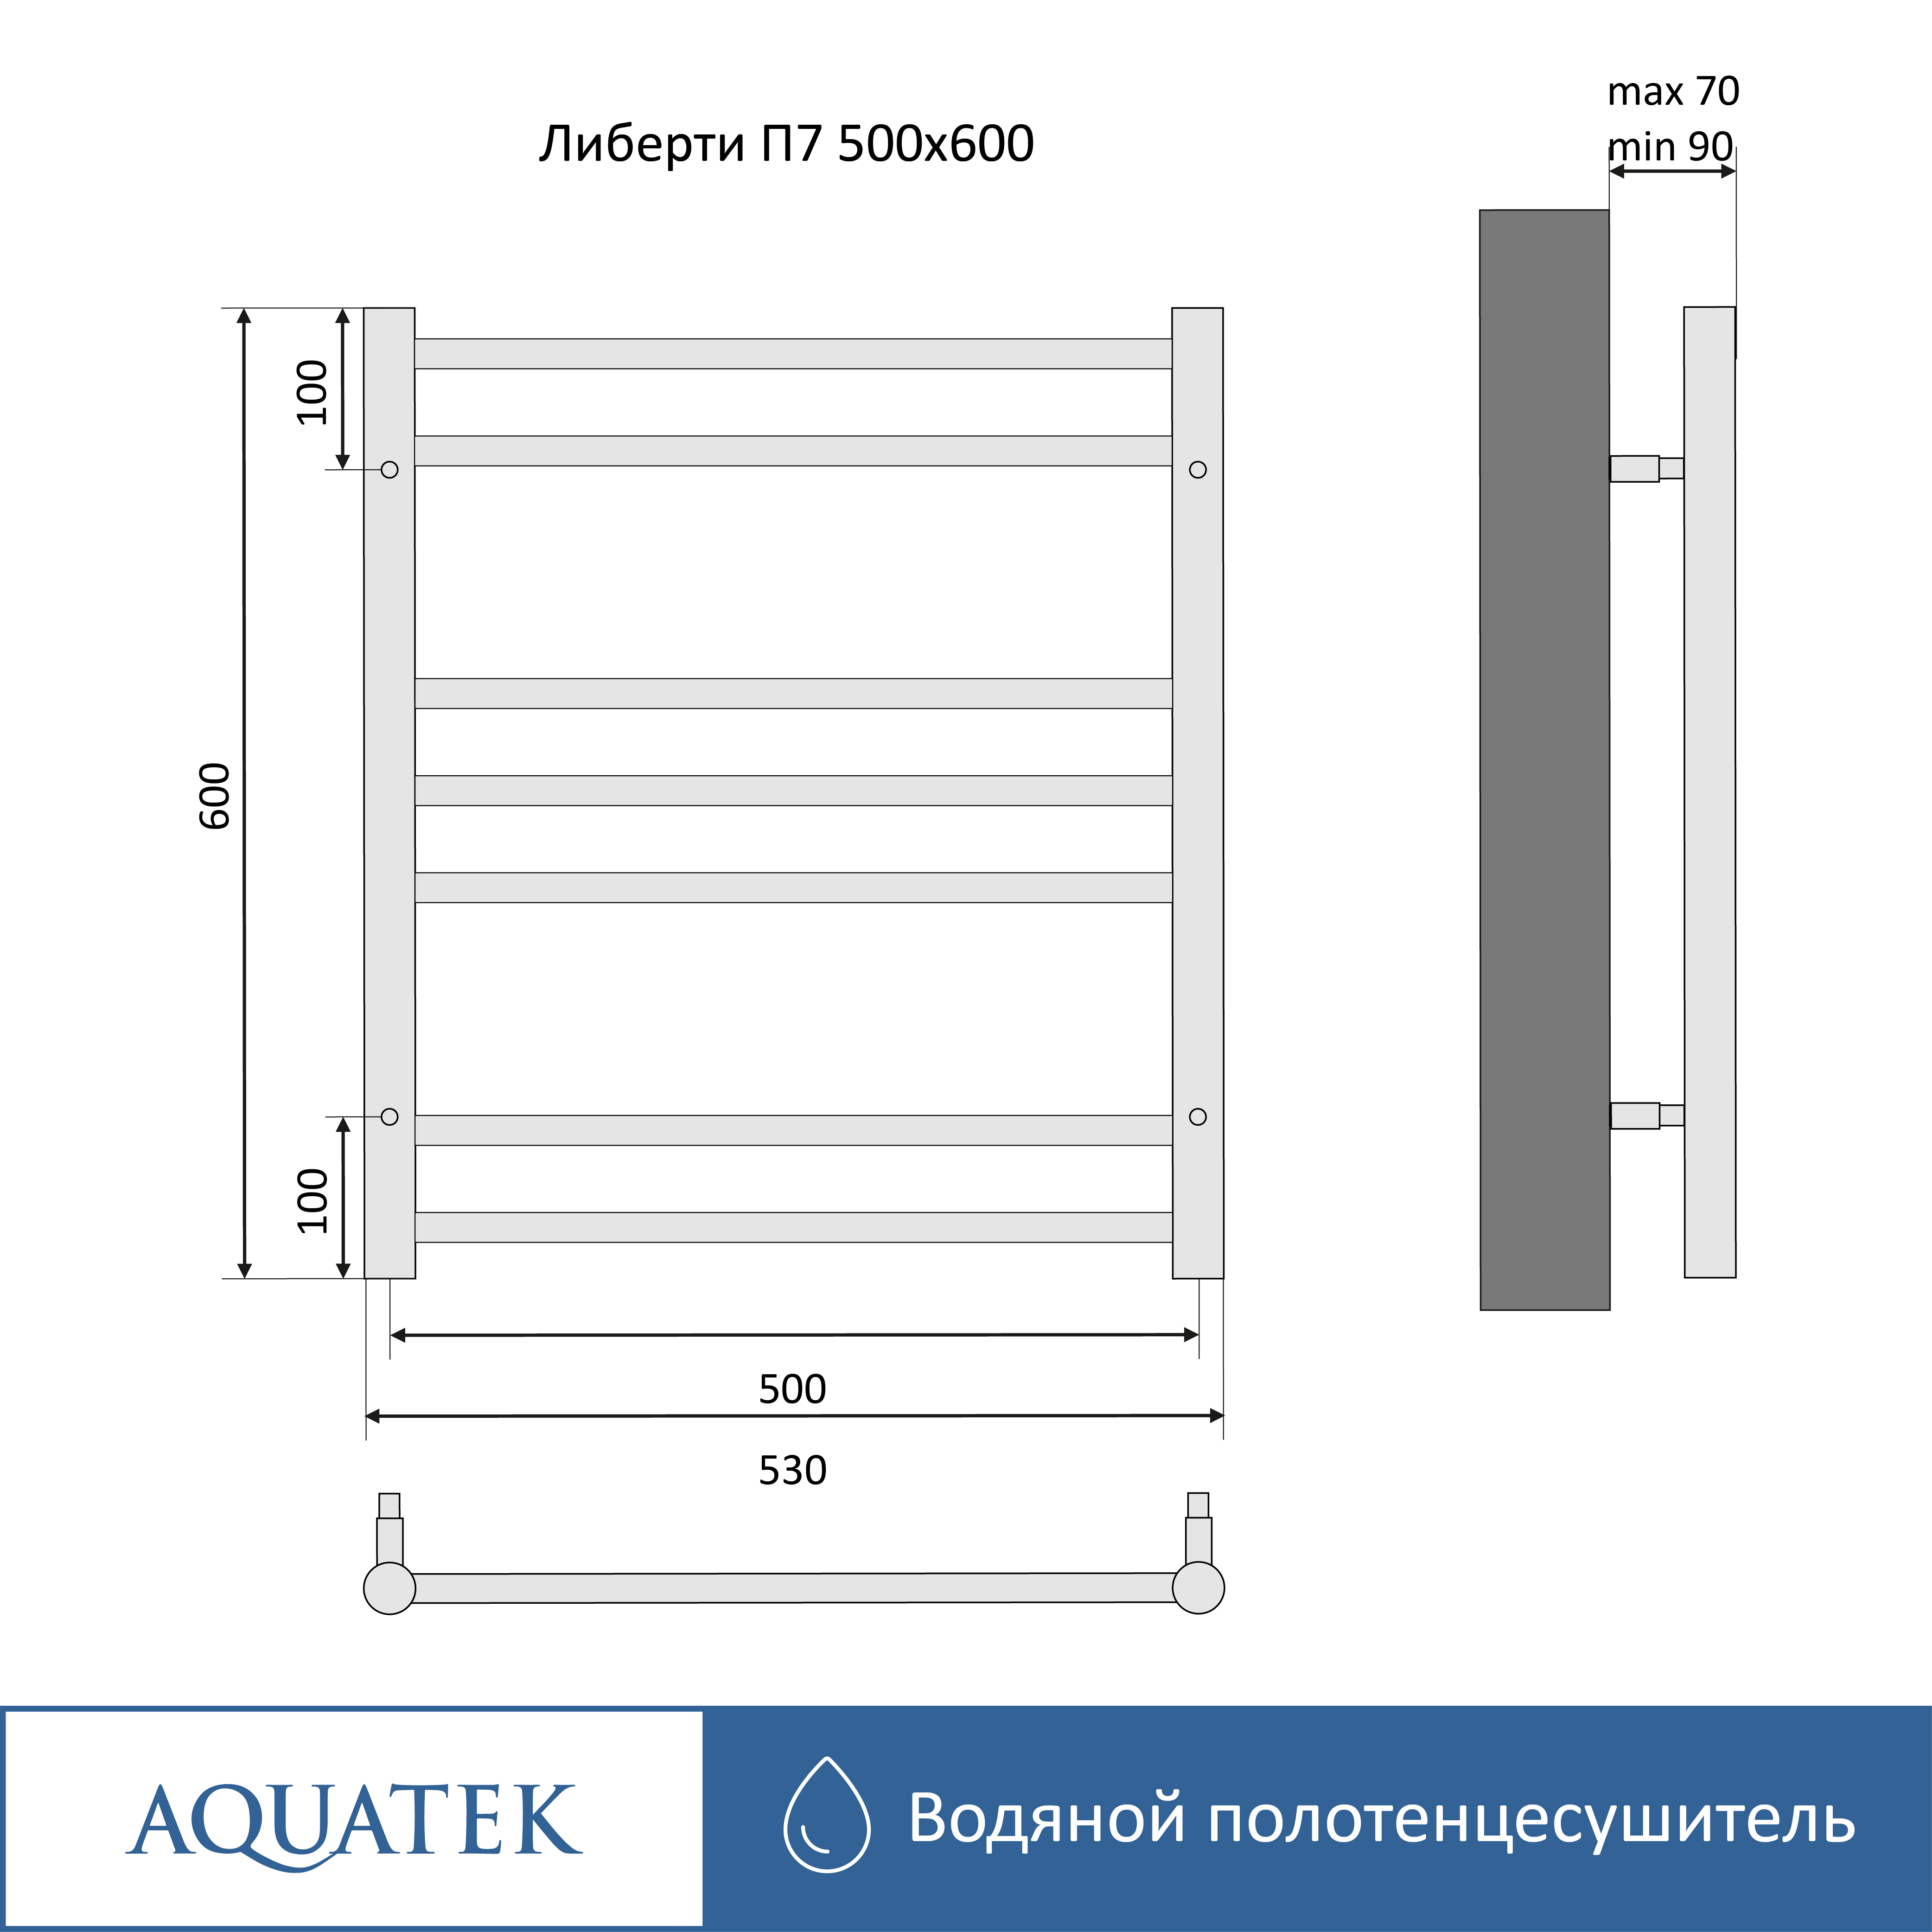 Полотенцесушитель водяной Aquatek Либерти П7 500х600 AQ RR0760CH - 14